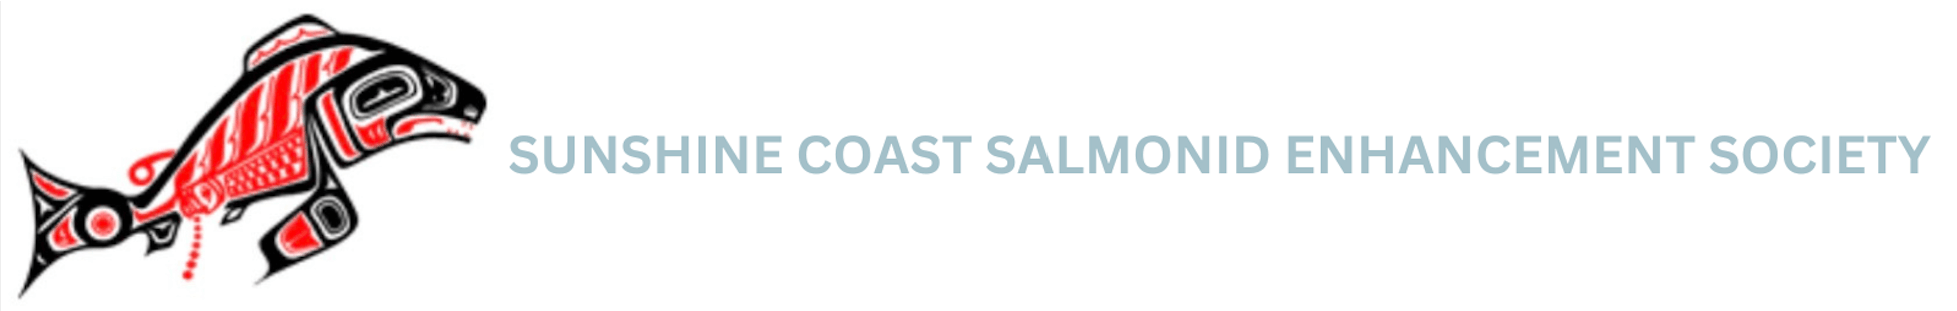 Sunshine Coast Salmonid Enhancement Society